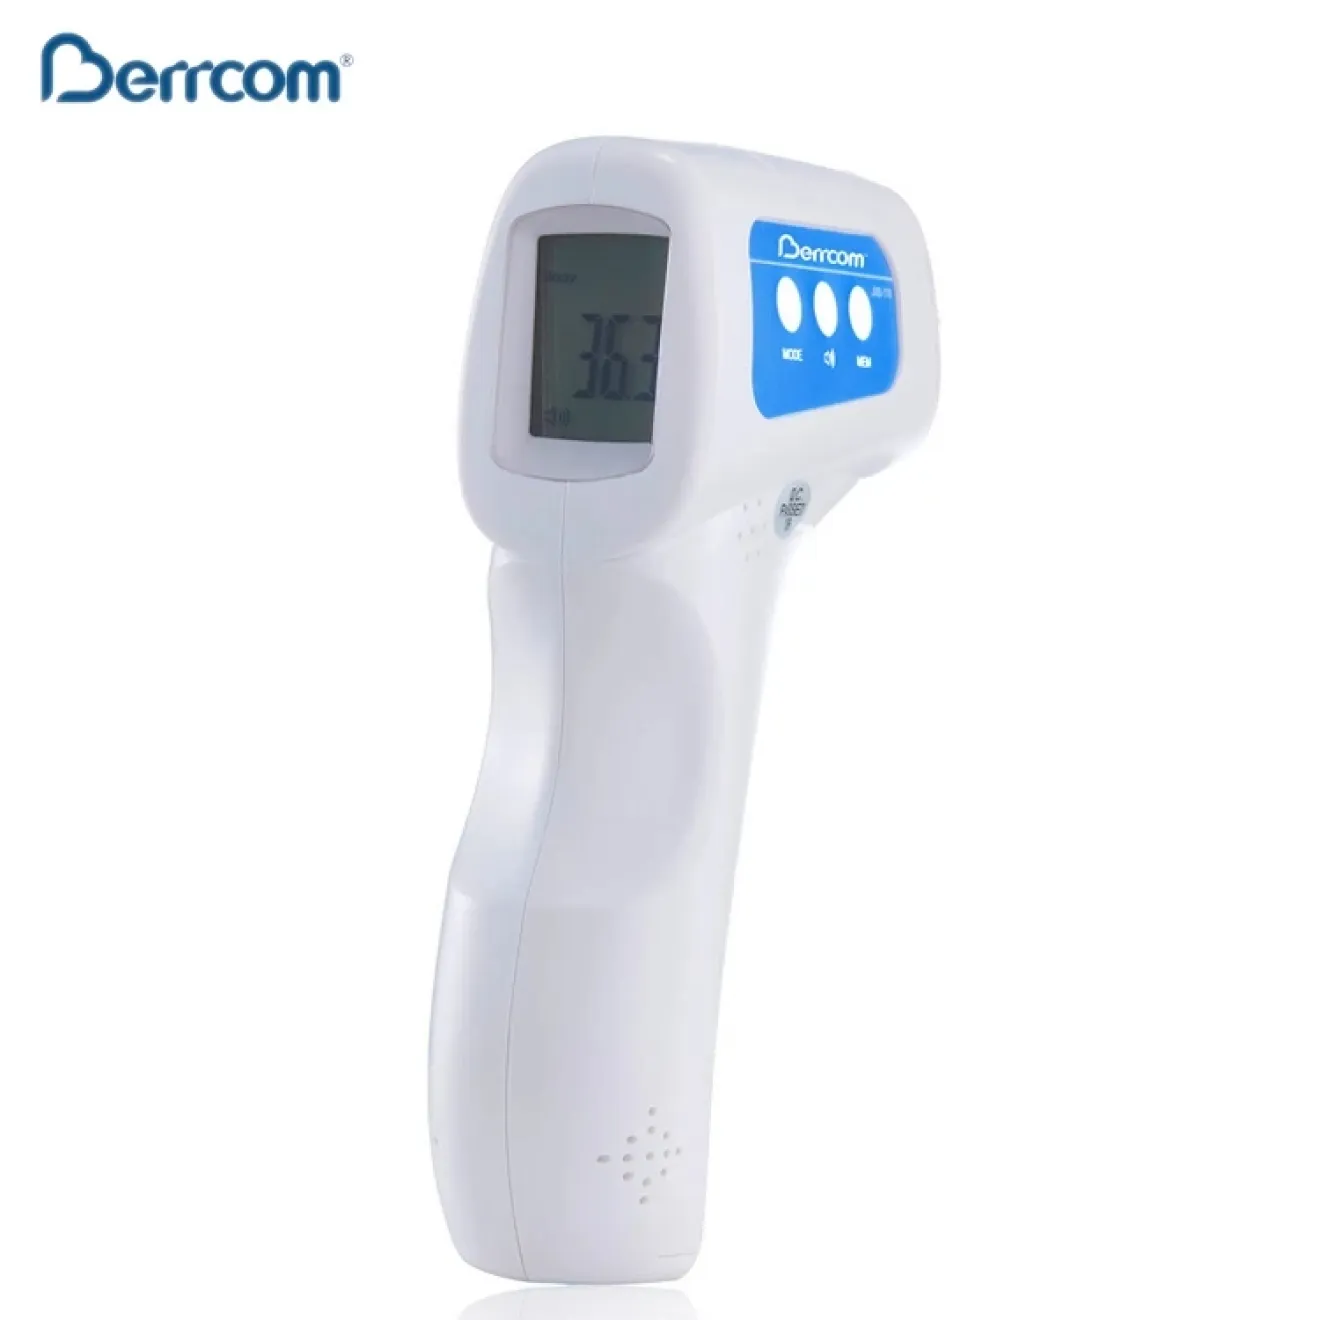 Berrcom kontaktfr. IRT-Stirnthermometer JXB178 1ST